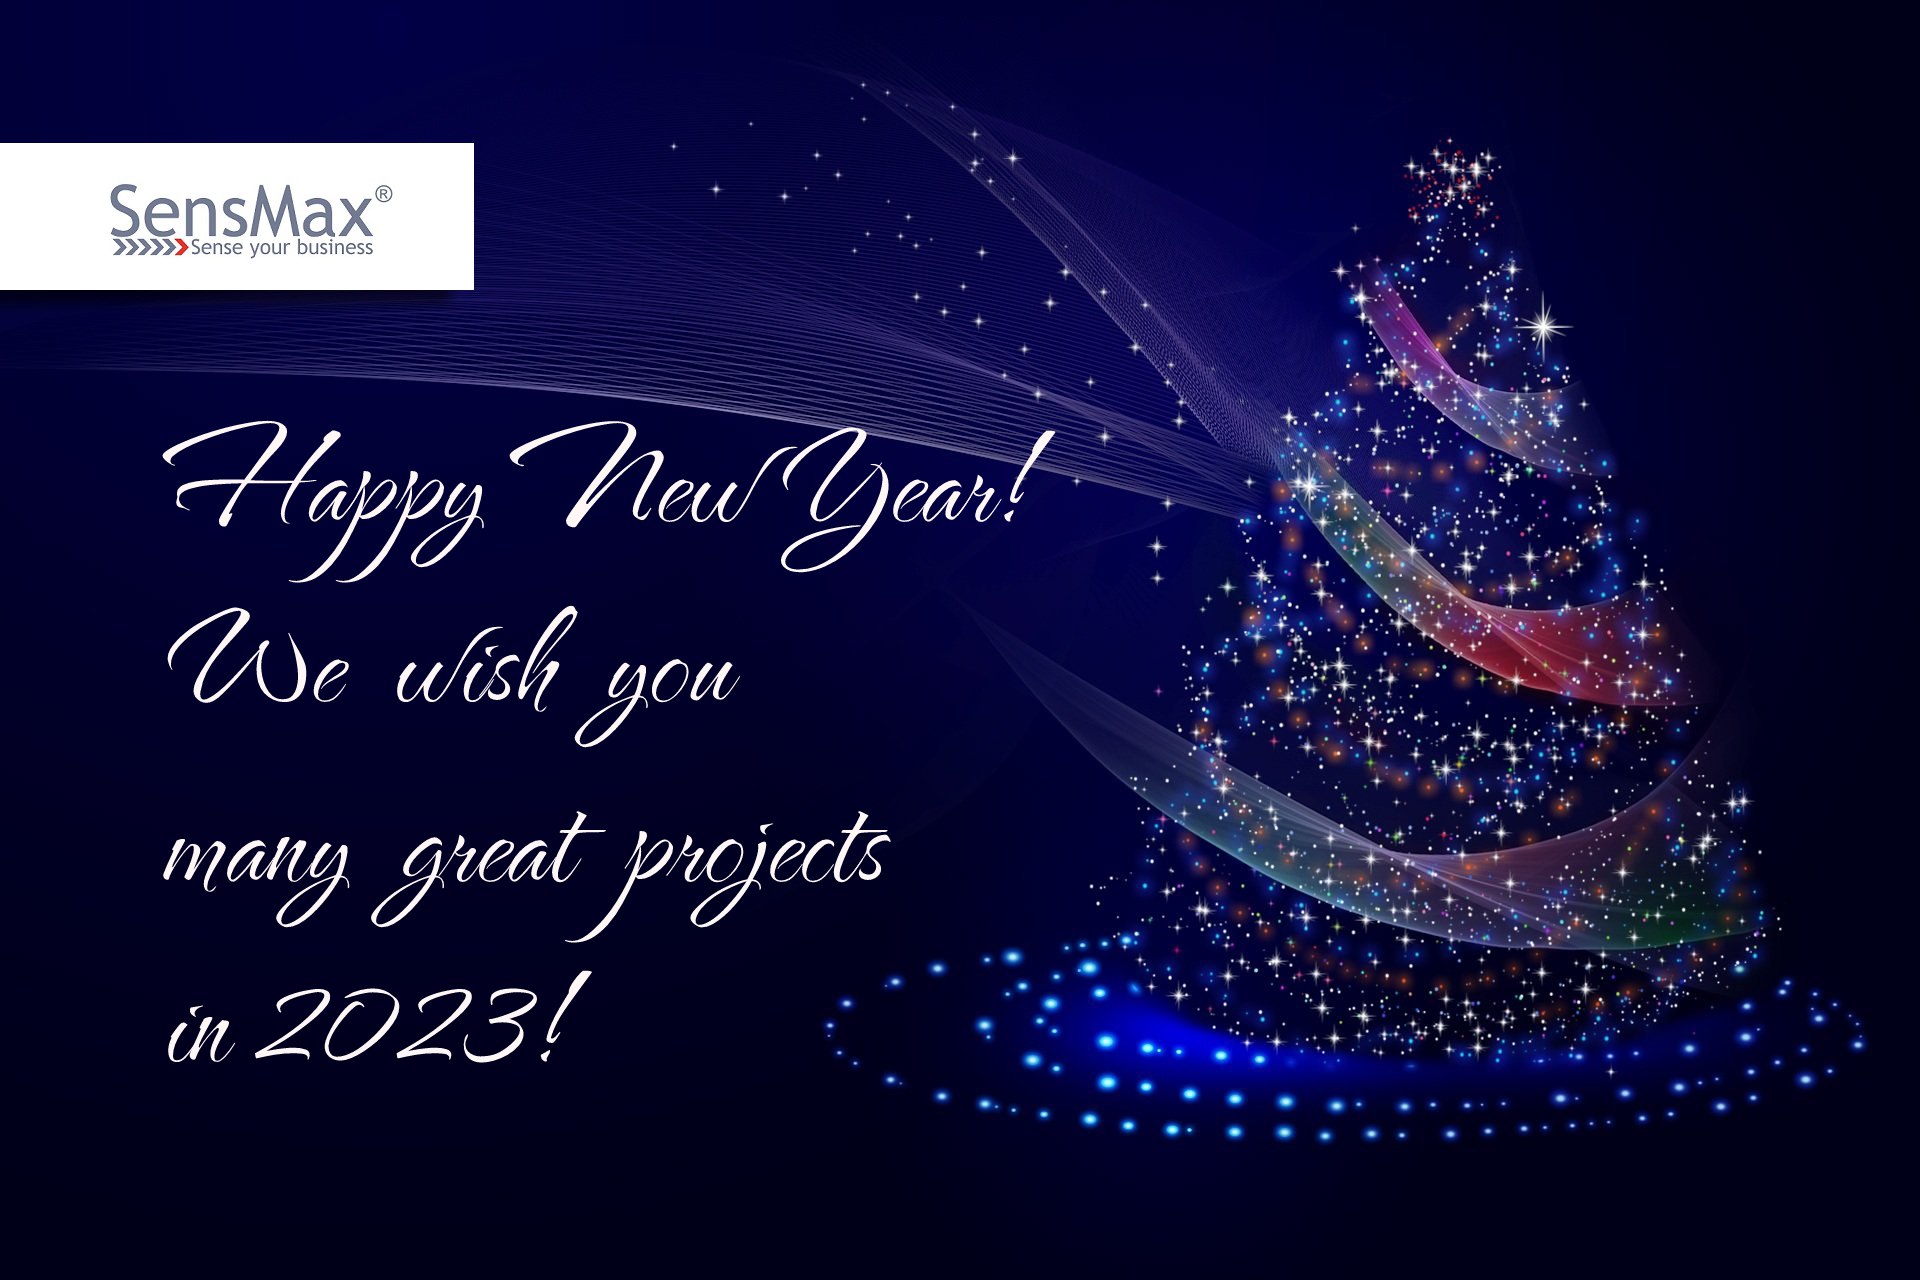 SensMax 2023 insights and Happy New Year